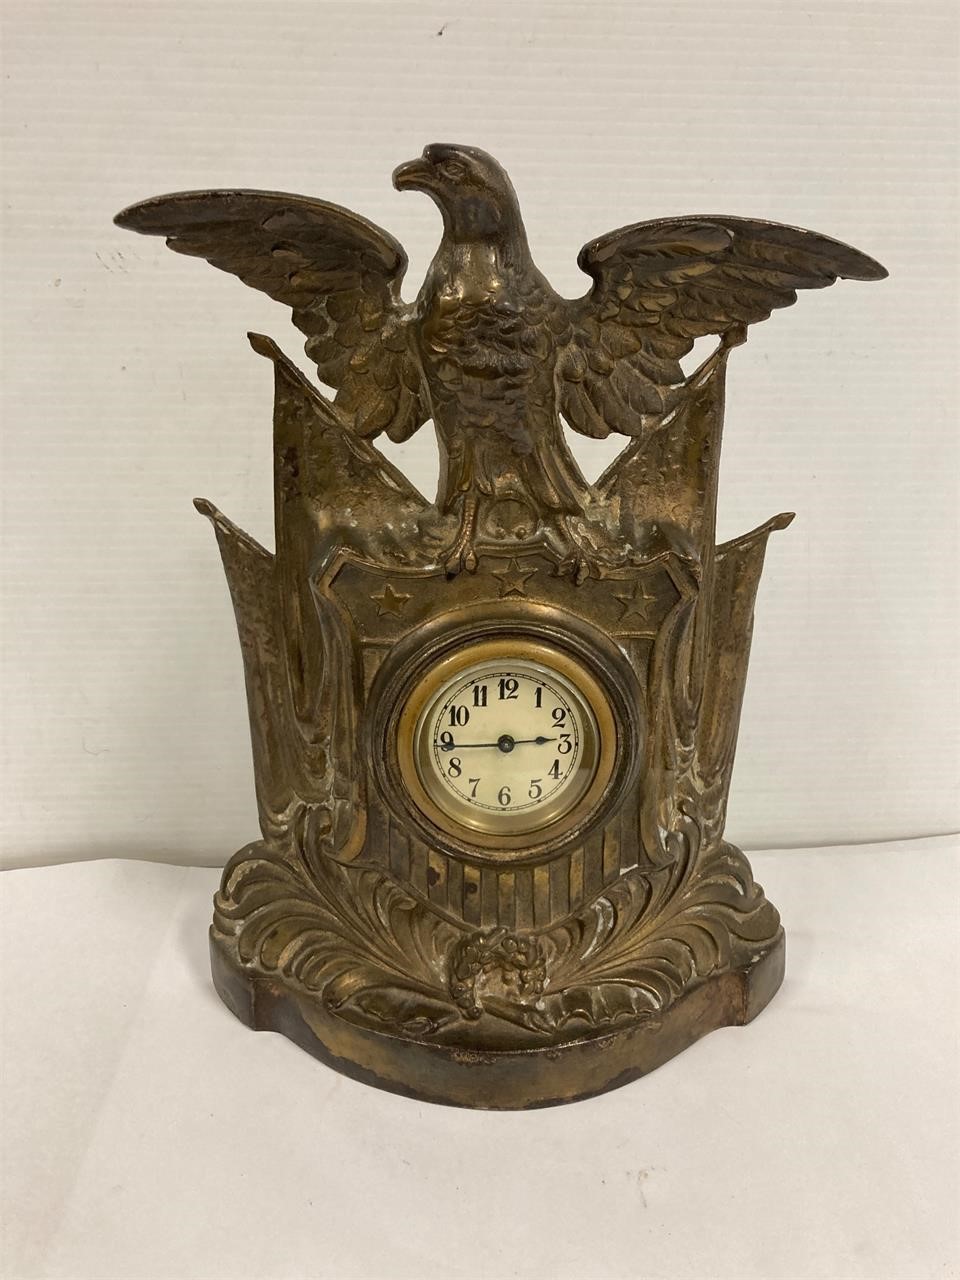 Brass Eagle mantle clock. No key. 13” tall